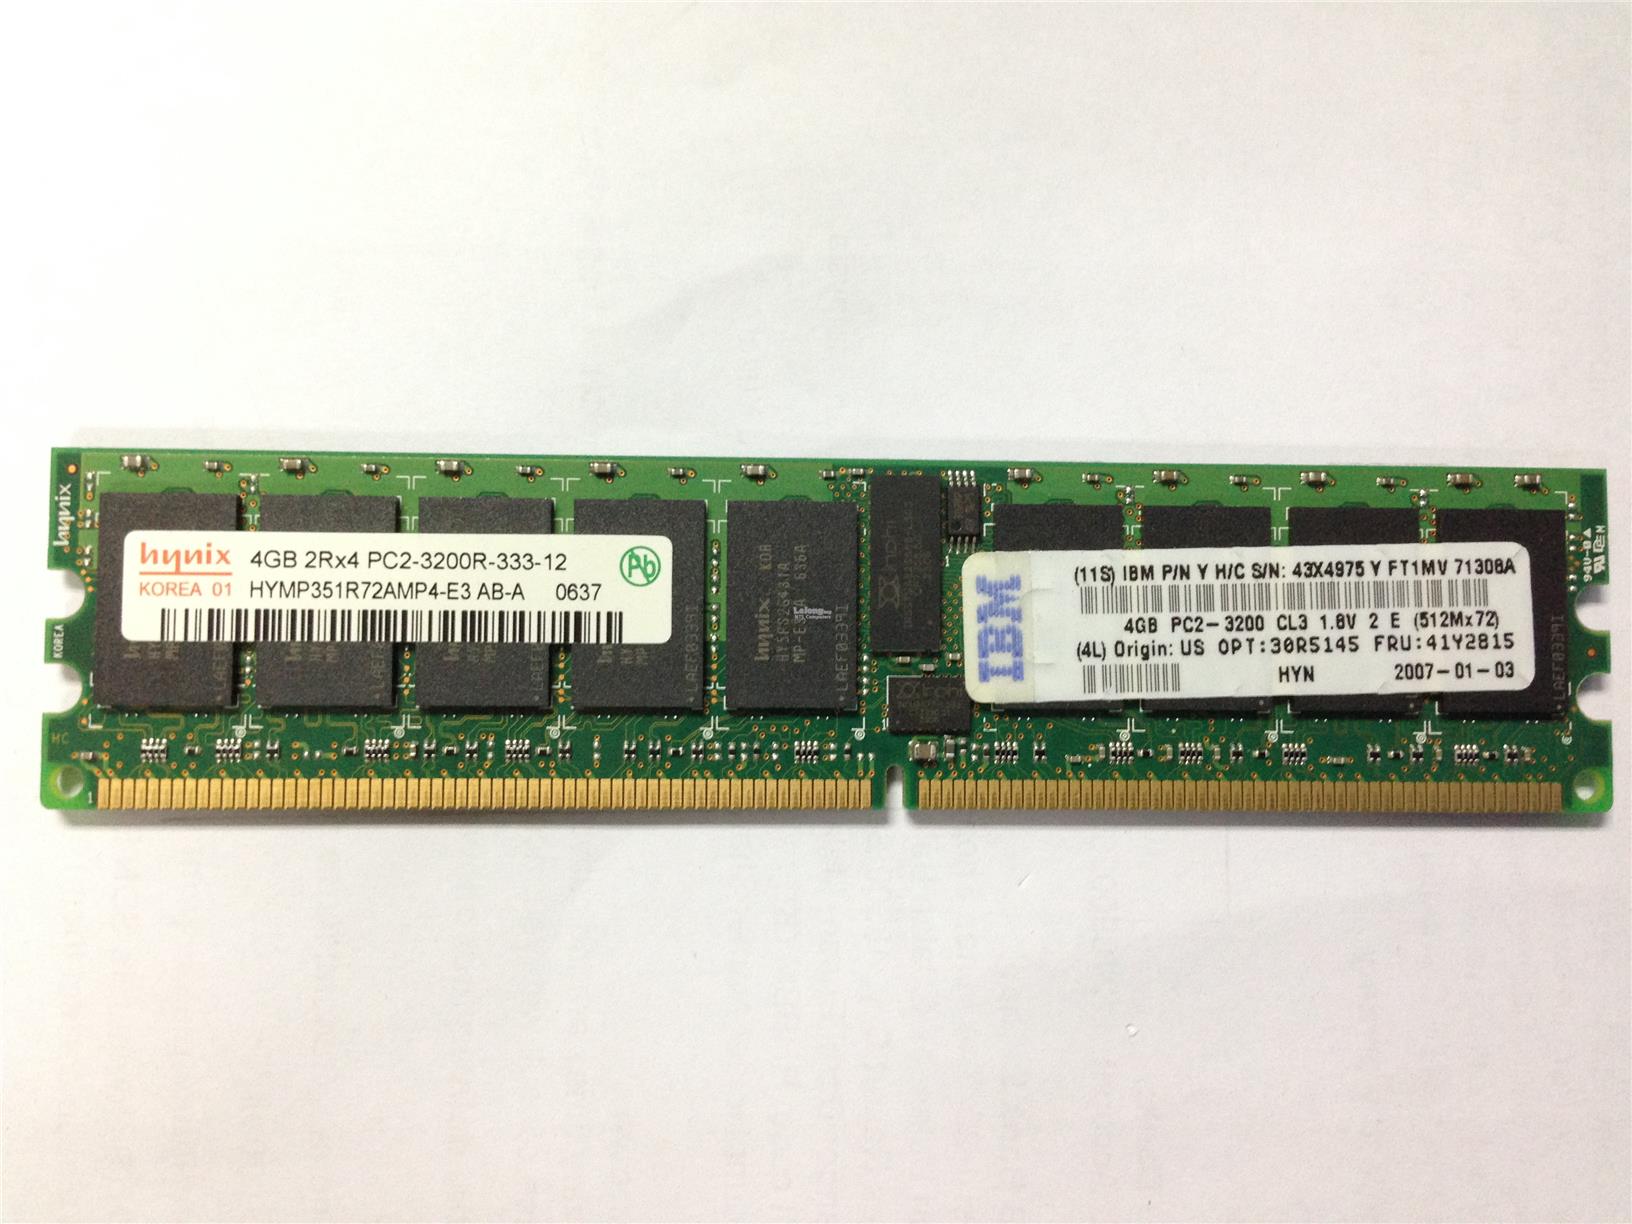 IBM 4GB DDR2 PC2-3200 400MHz ECC Reg (41Y2815)